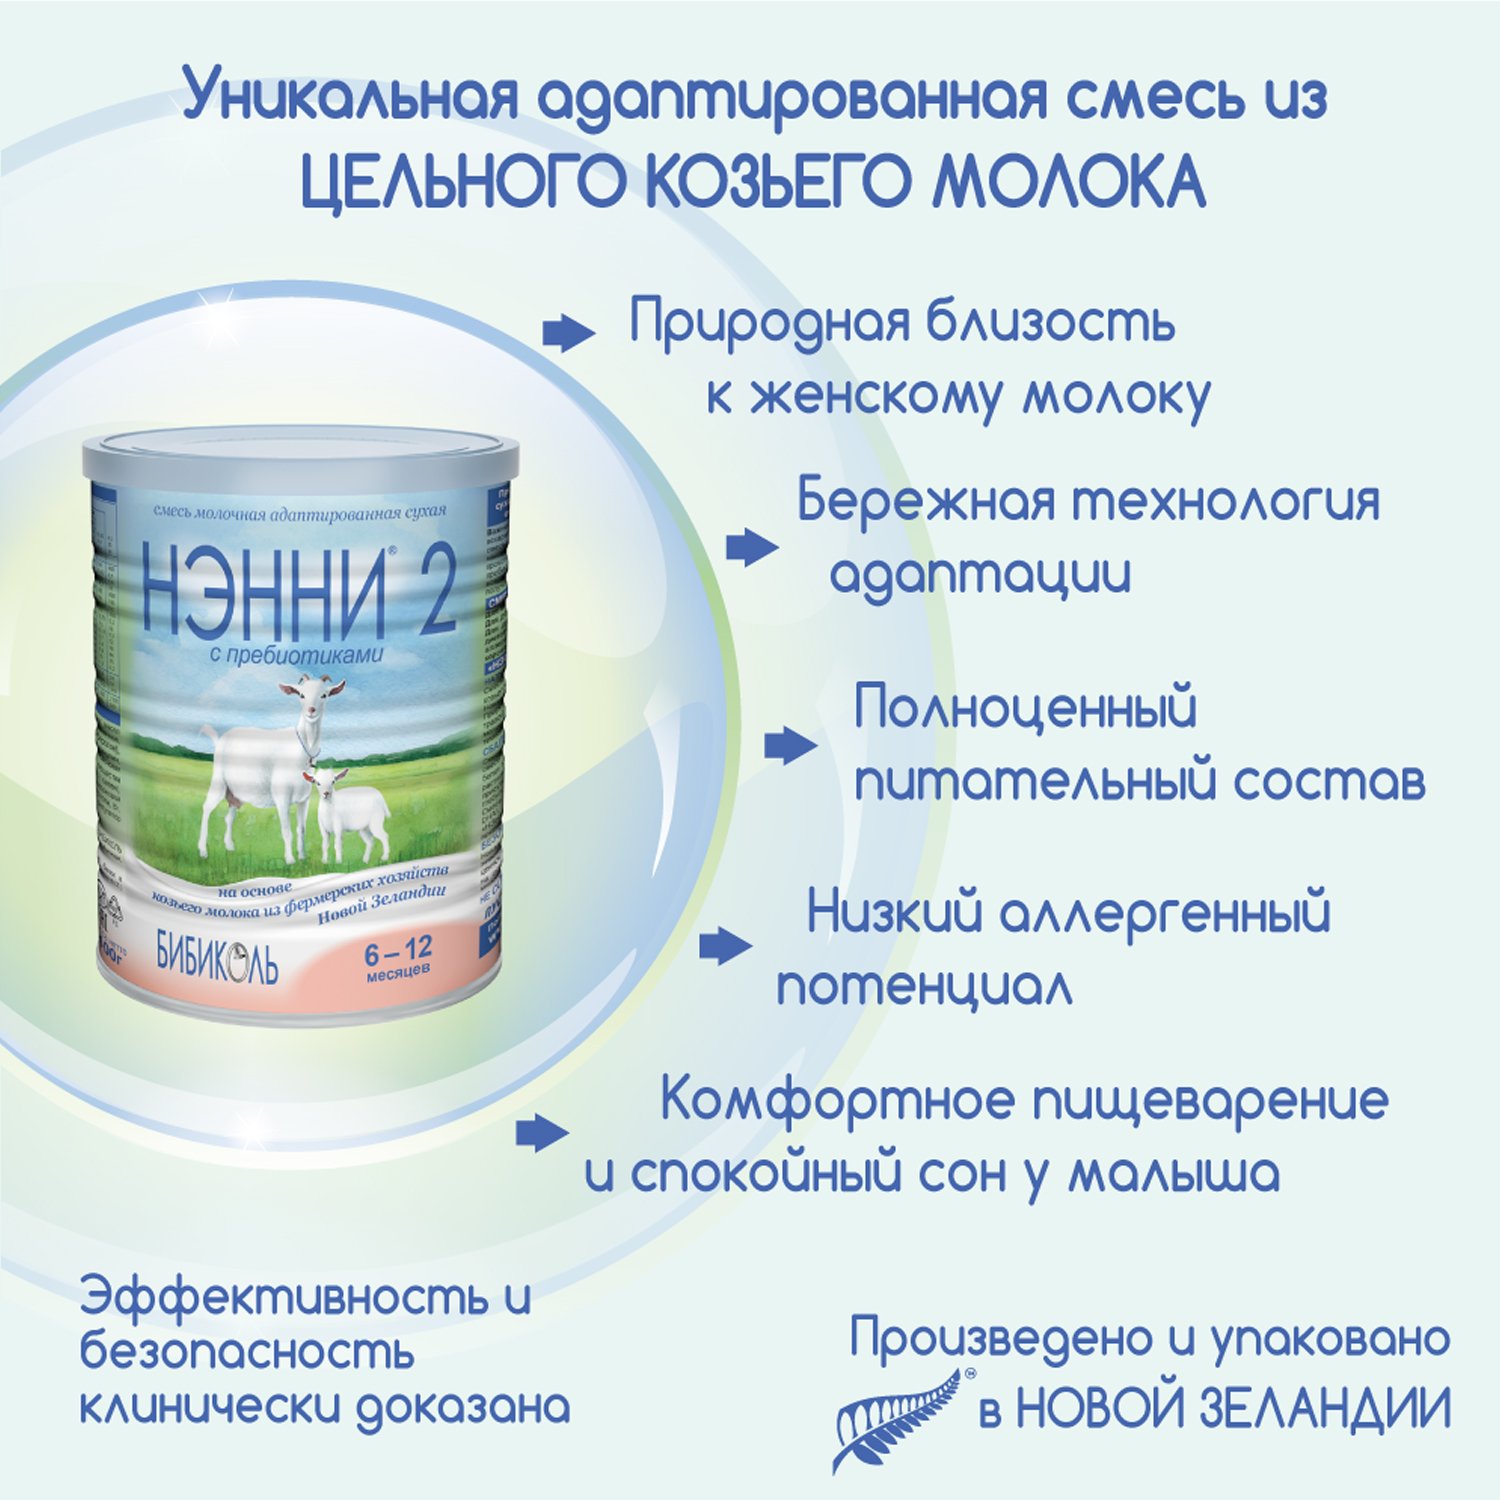 Молочная смесь Нэнни 2 с пребиотиками на основе козьего молока 800 г с 6-12 мес